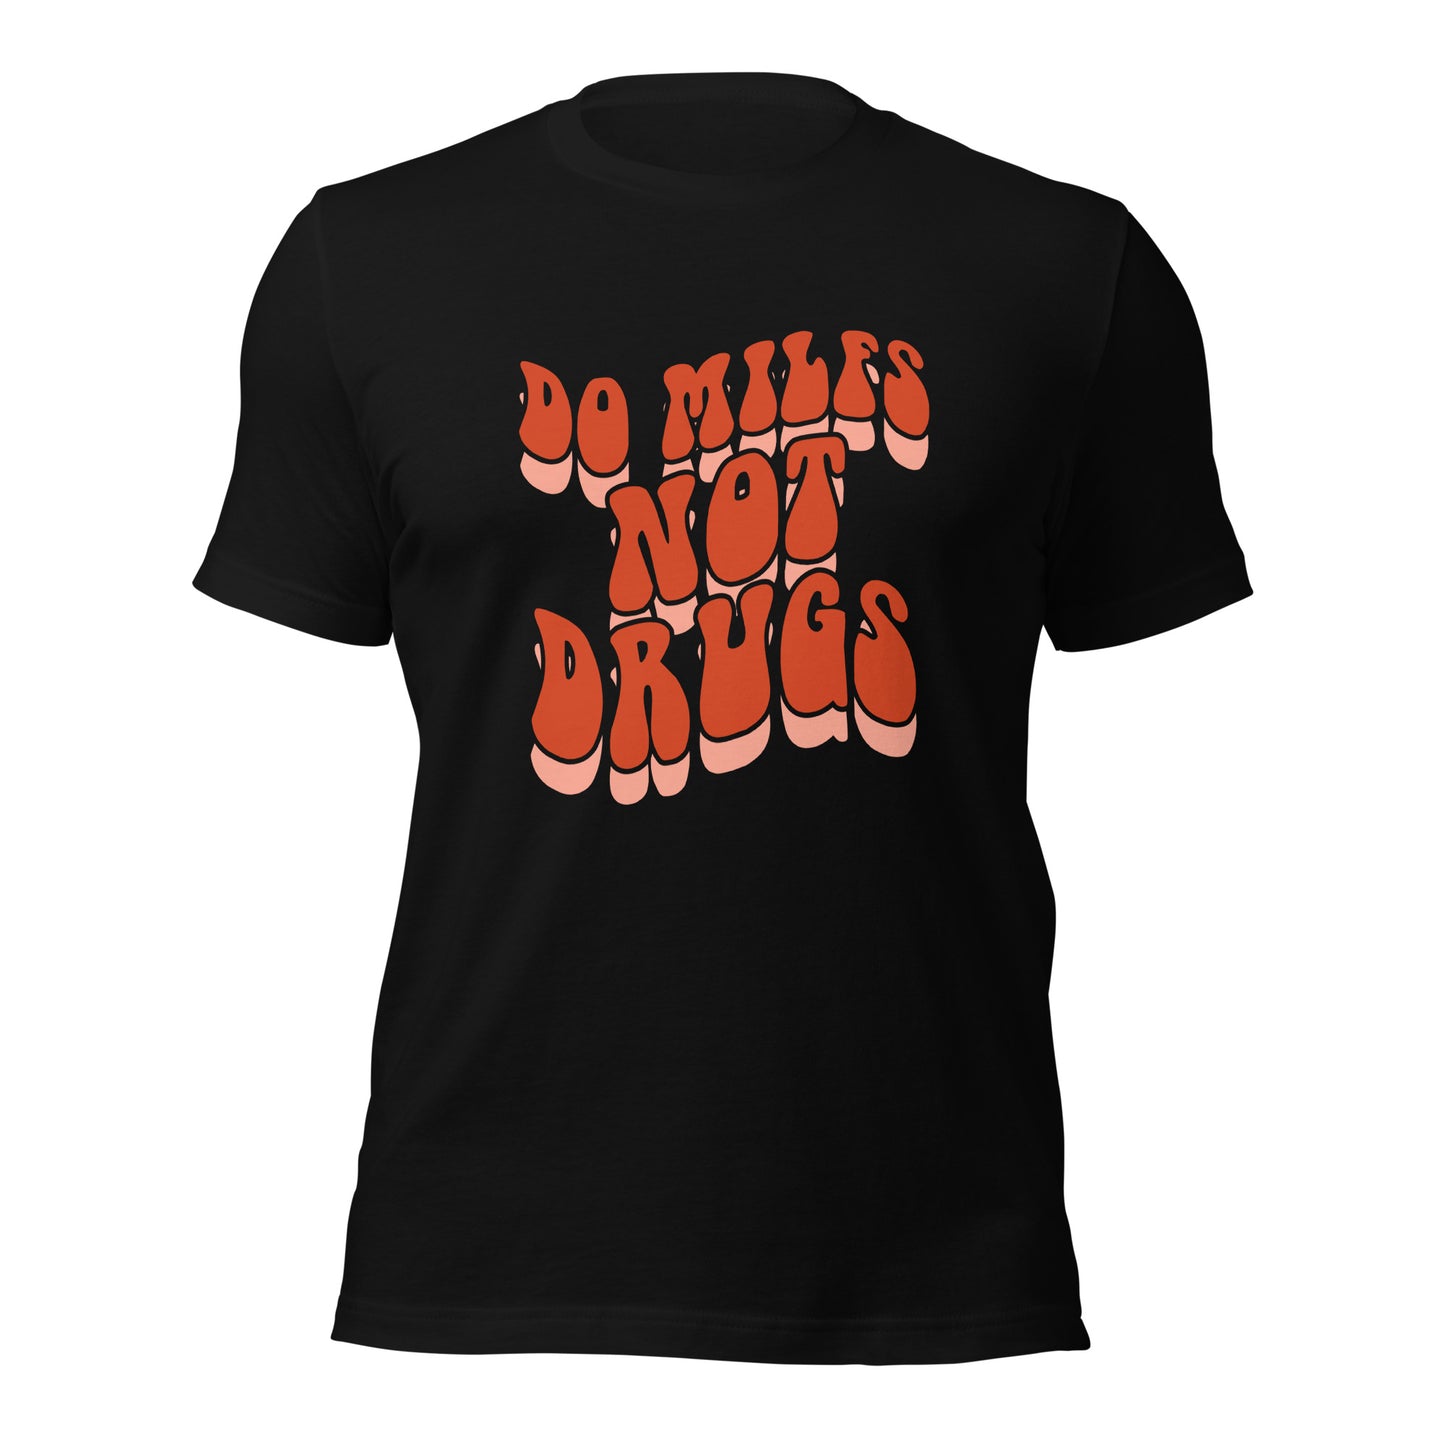 Do MILFs not Drugs t-shirt